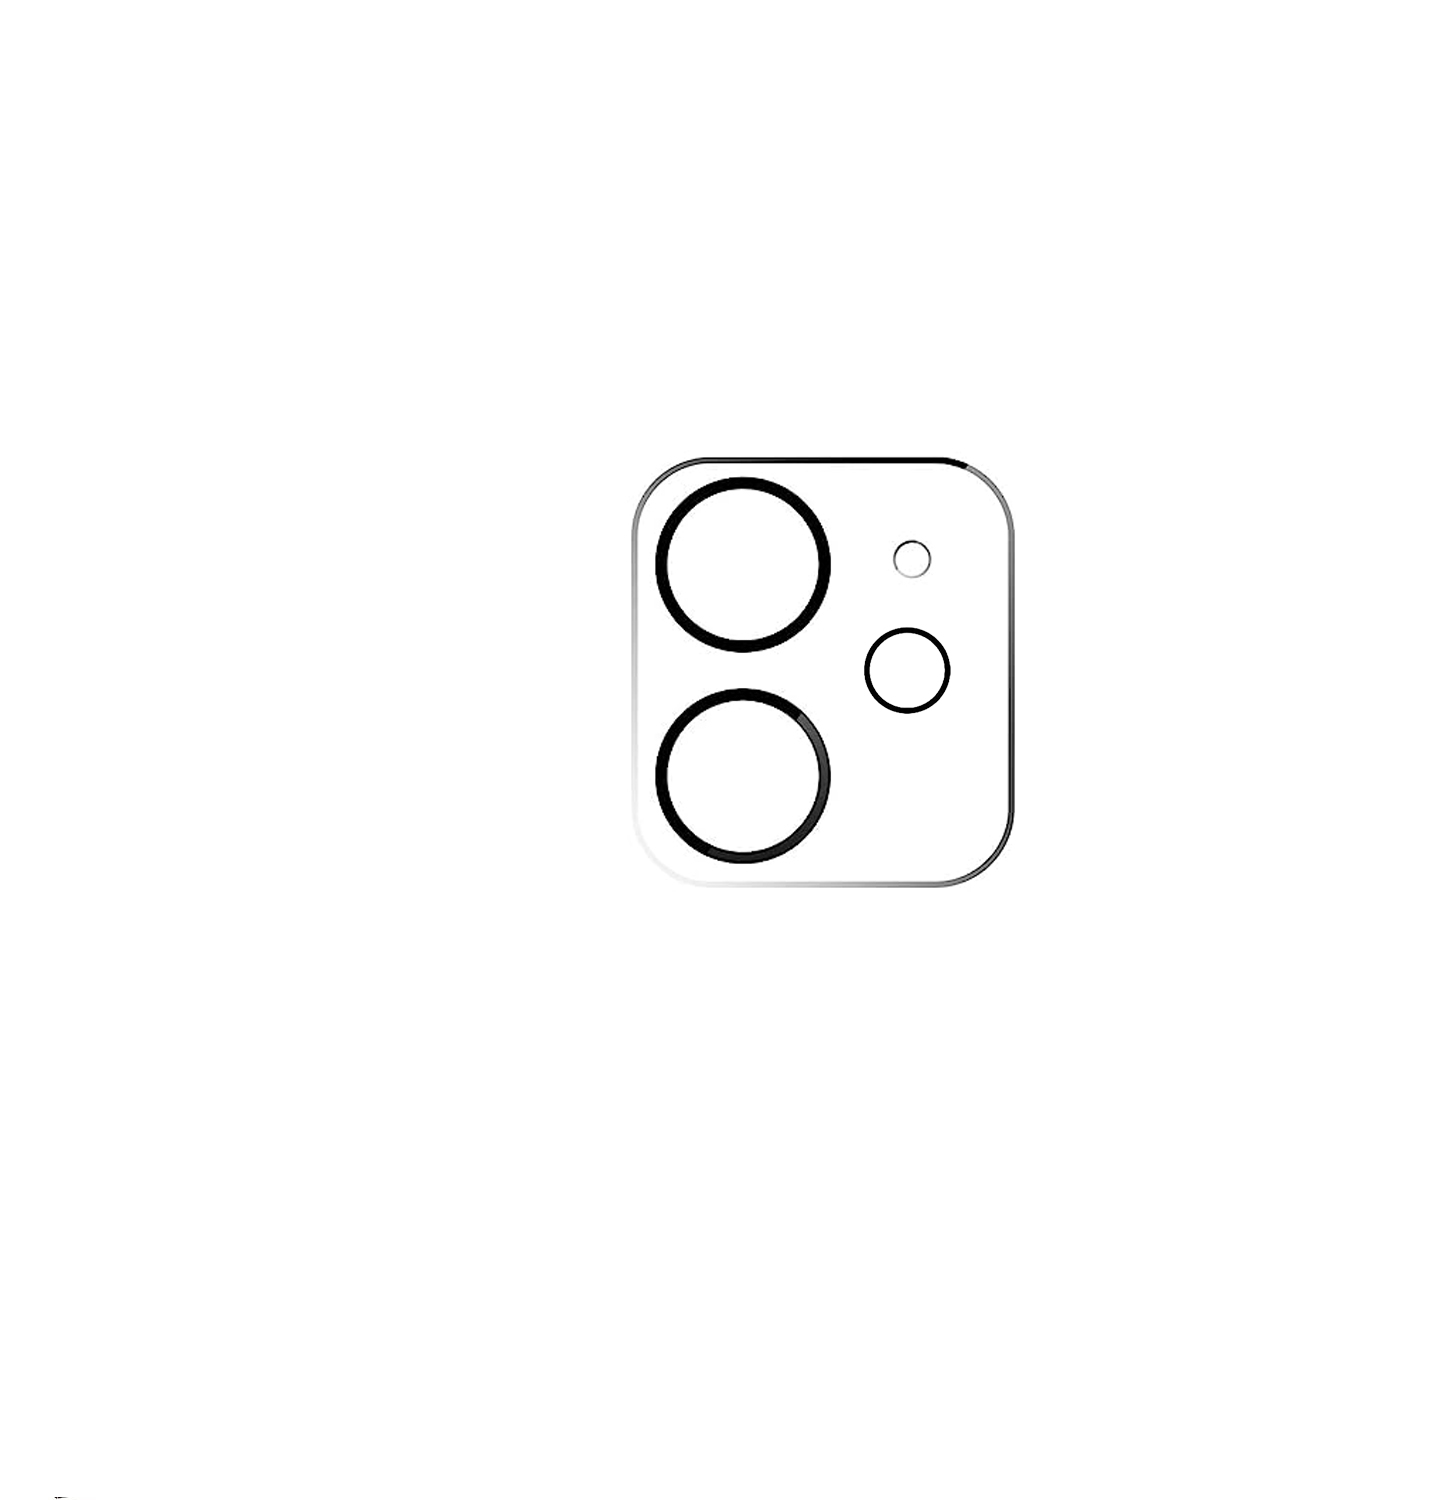 VENTARENT iPhone Camera Kameraschutz(für Apple iPhone 12) iPhone